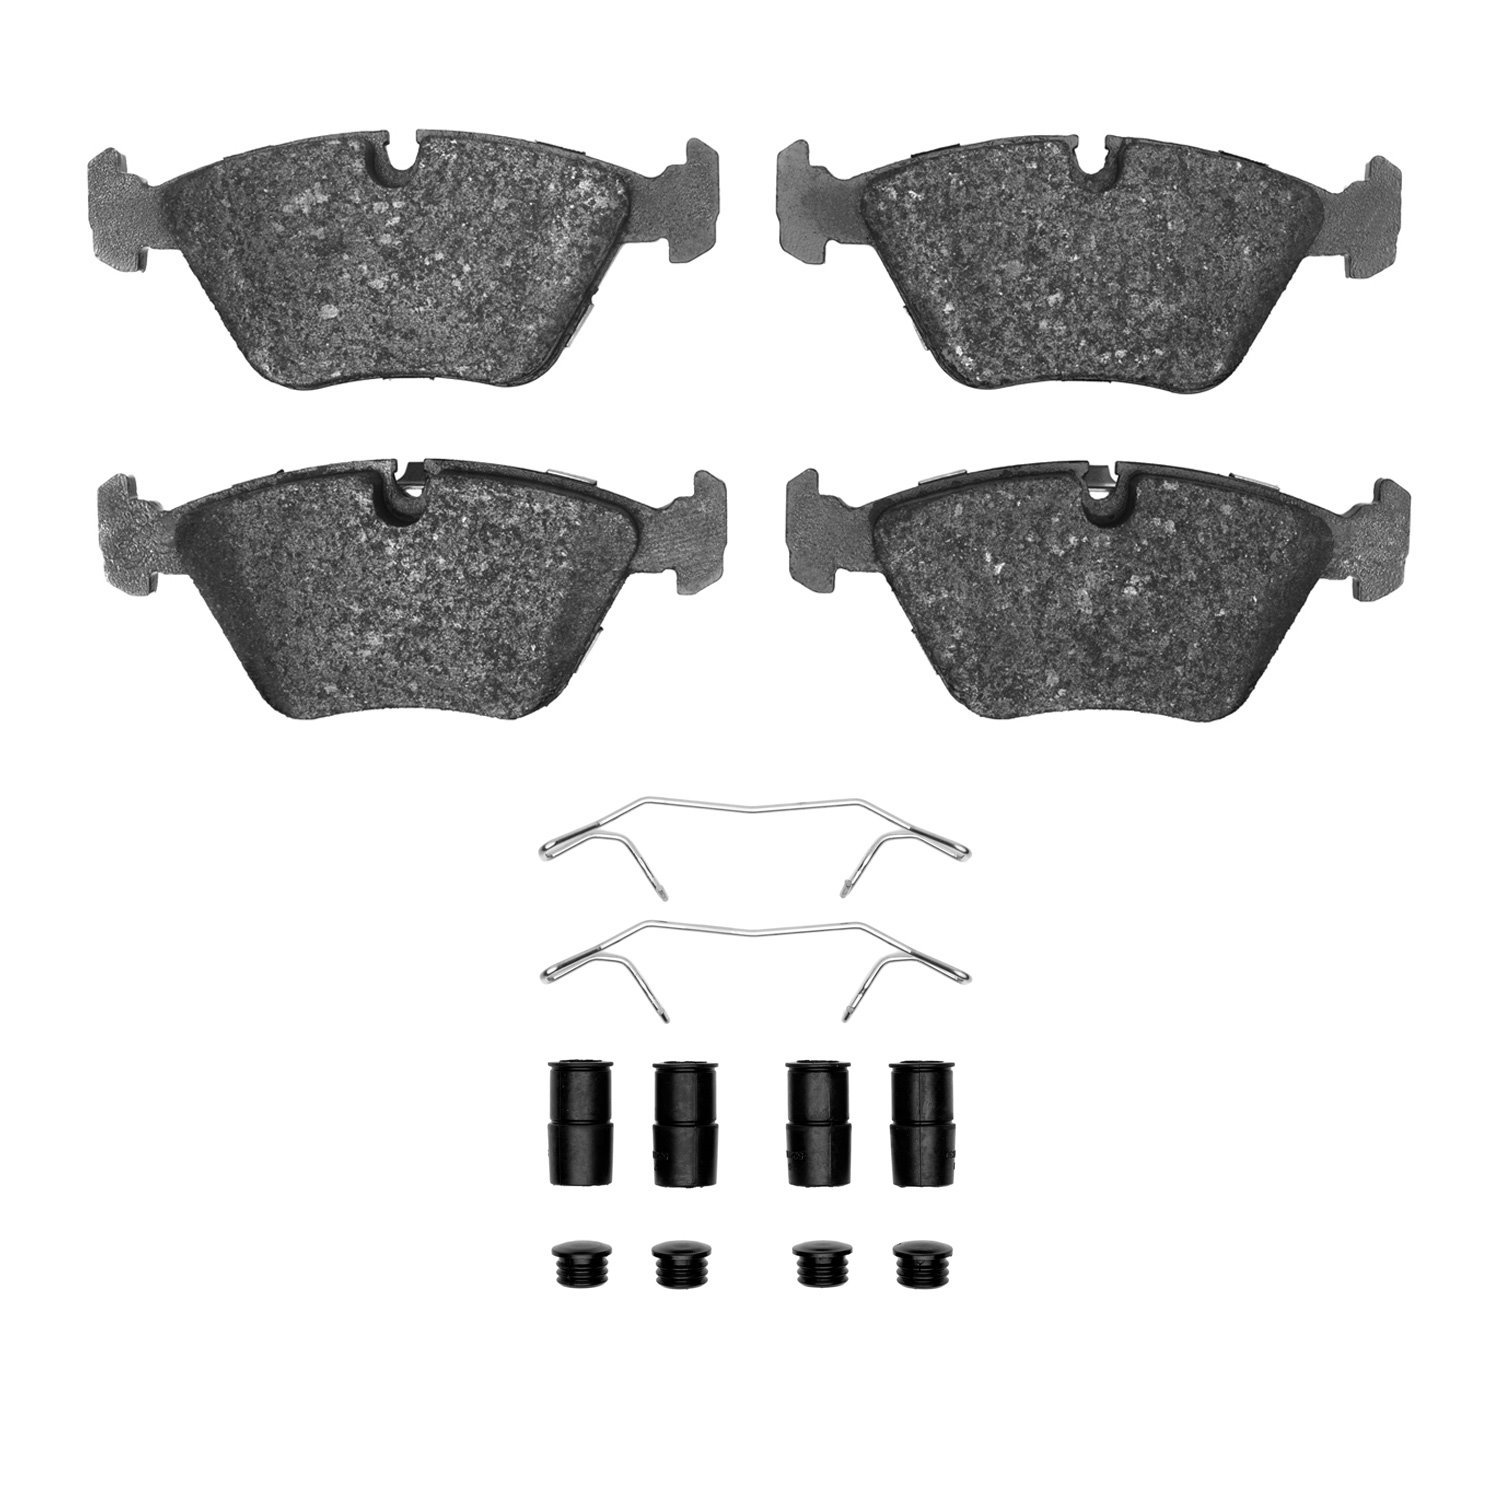 1310-0394-11 3000-Series Ceramic Brake Pads & Hardware Kit, 1989-2006 Multiple Makes/Models, Position: Front